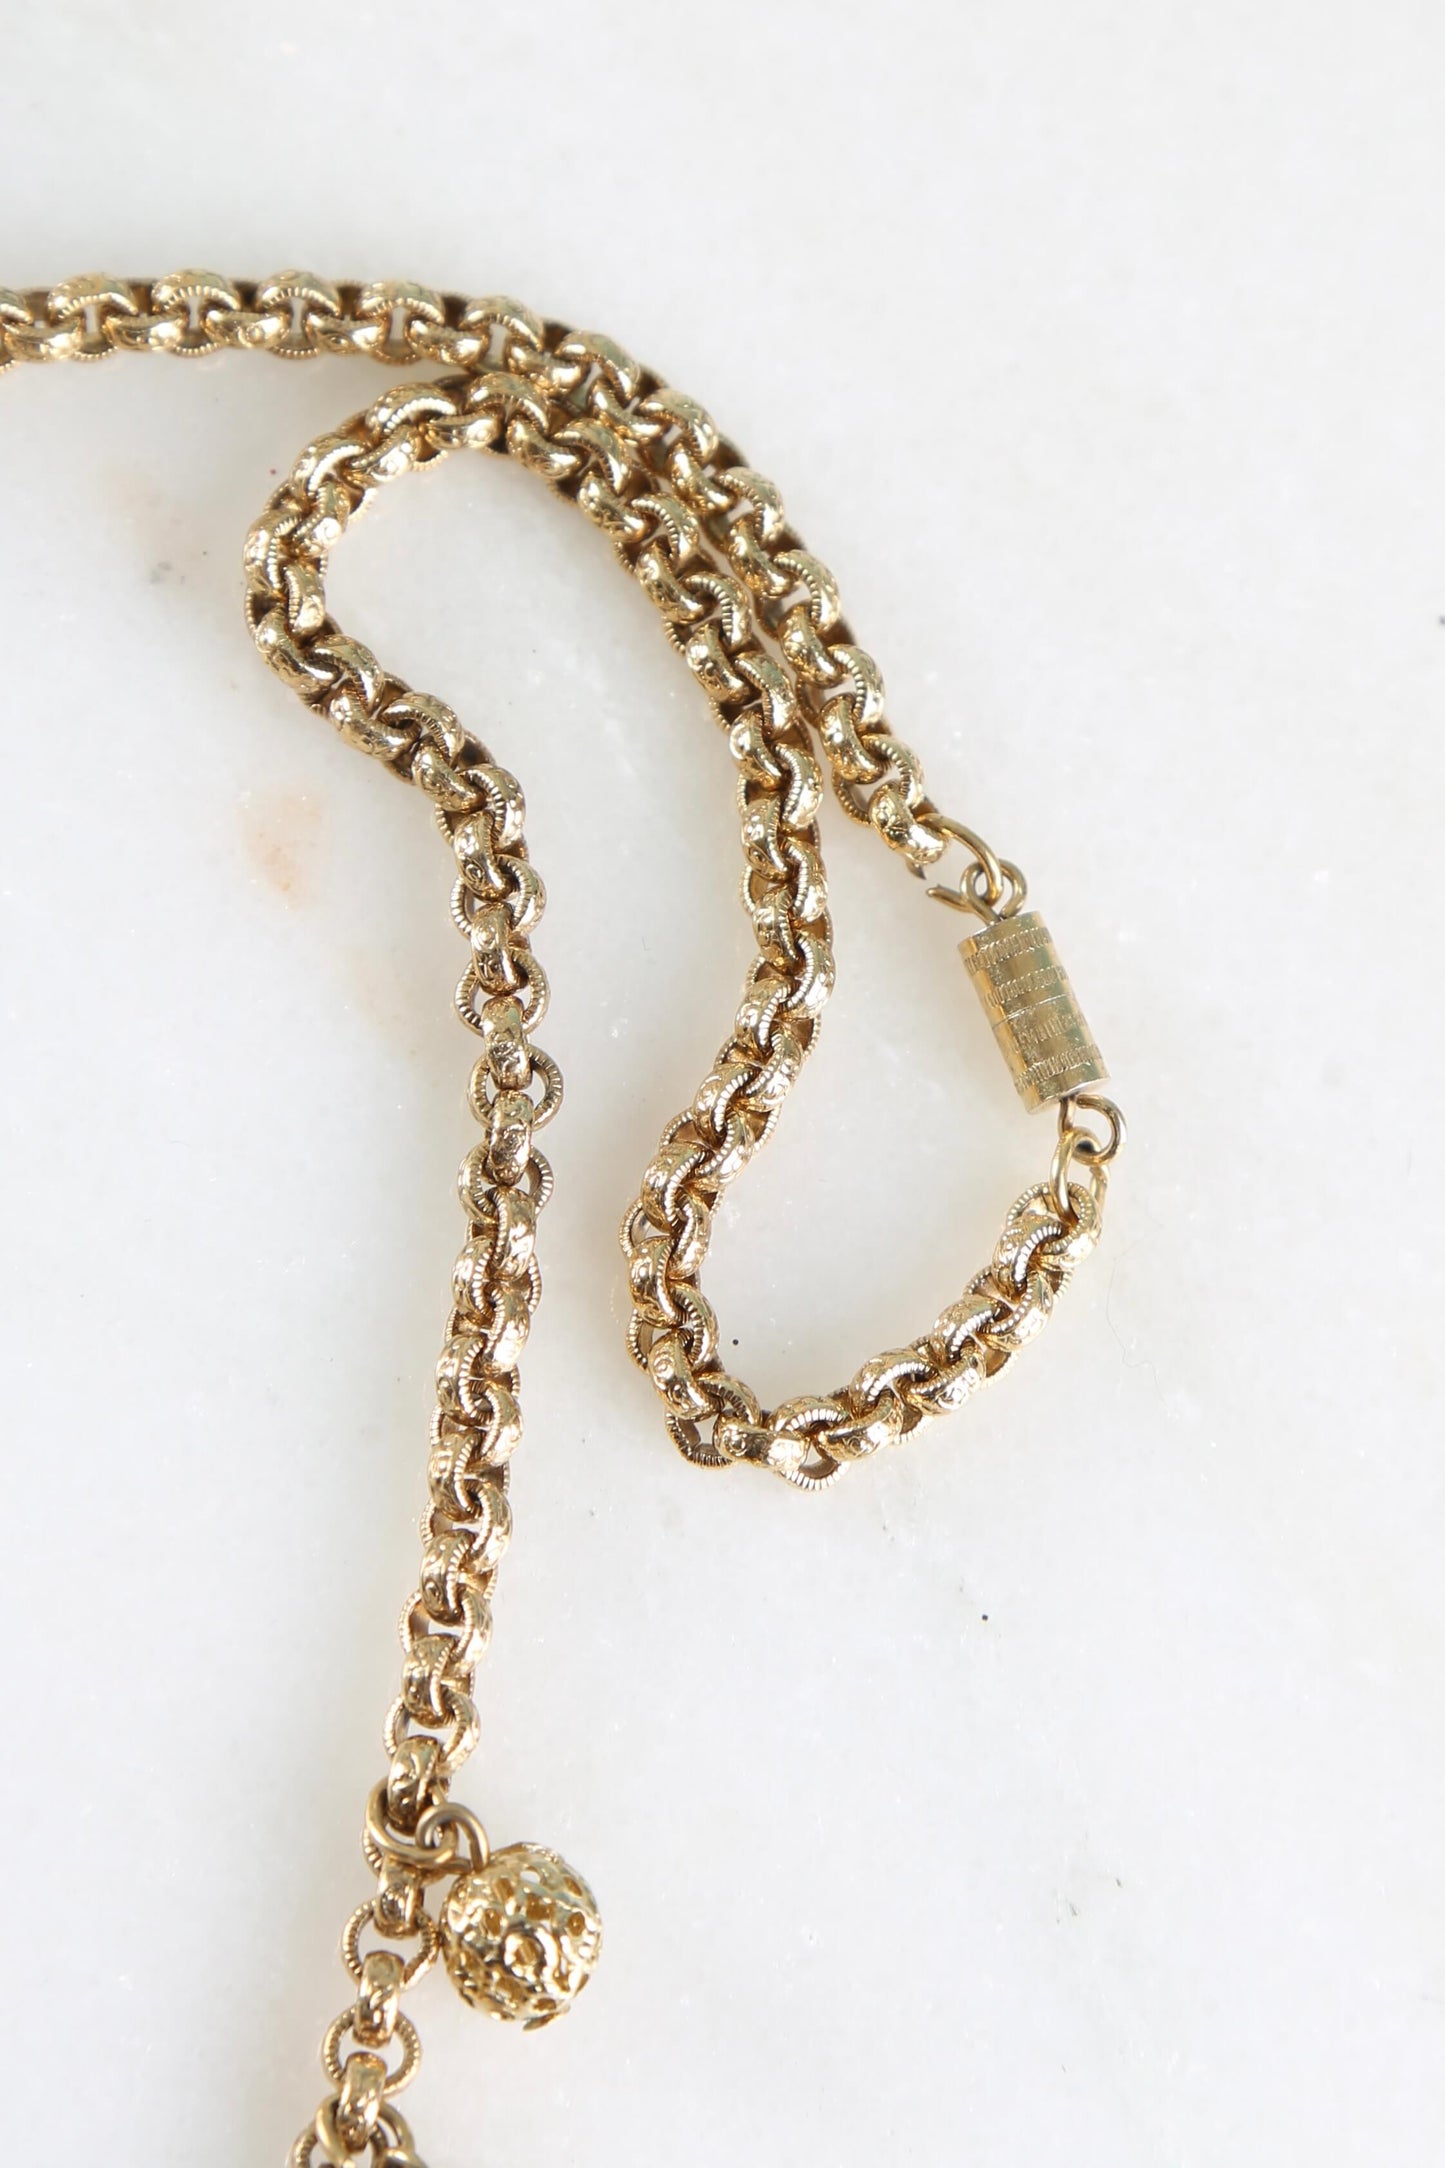 1970's Golden Filigree Bauble Necklace